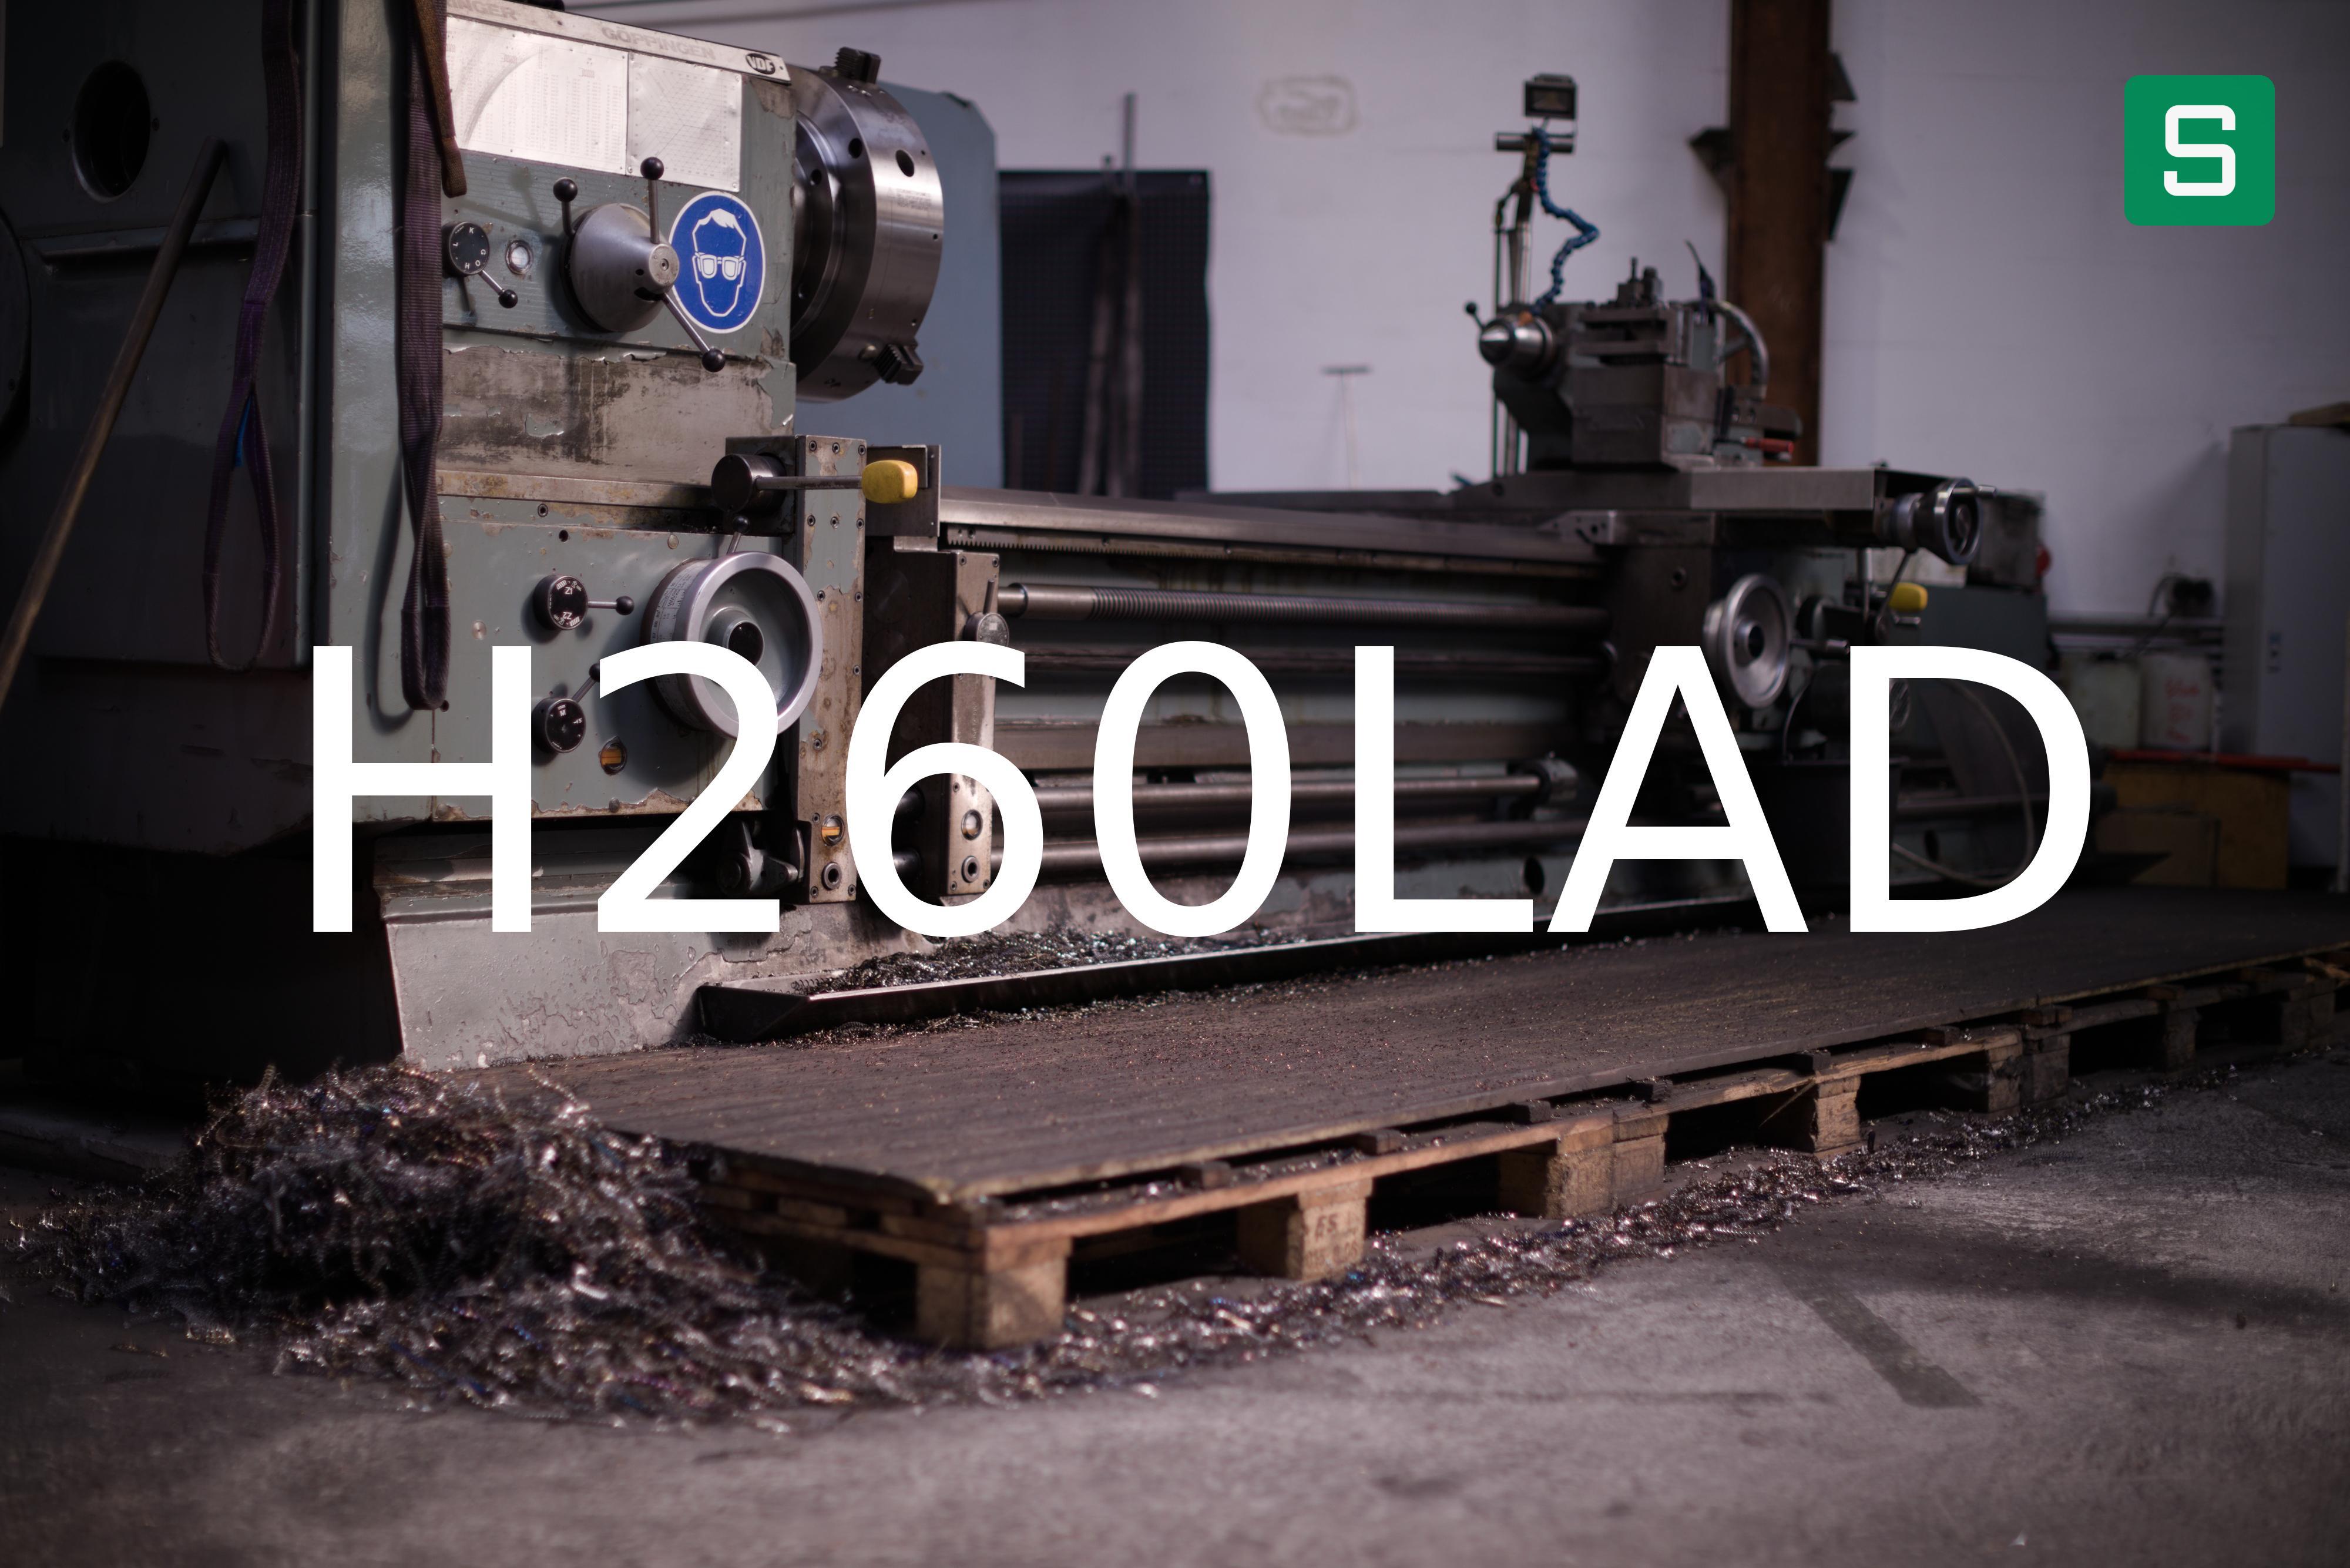 Steel Material: H260LAD